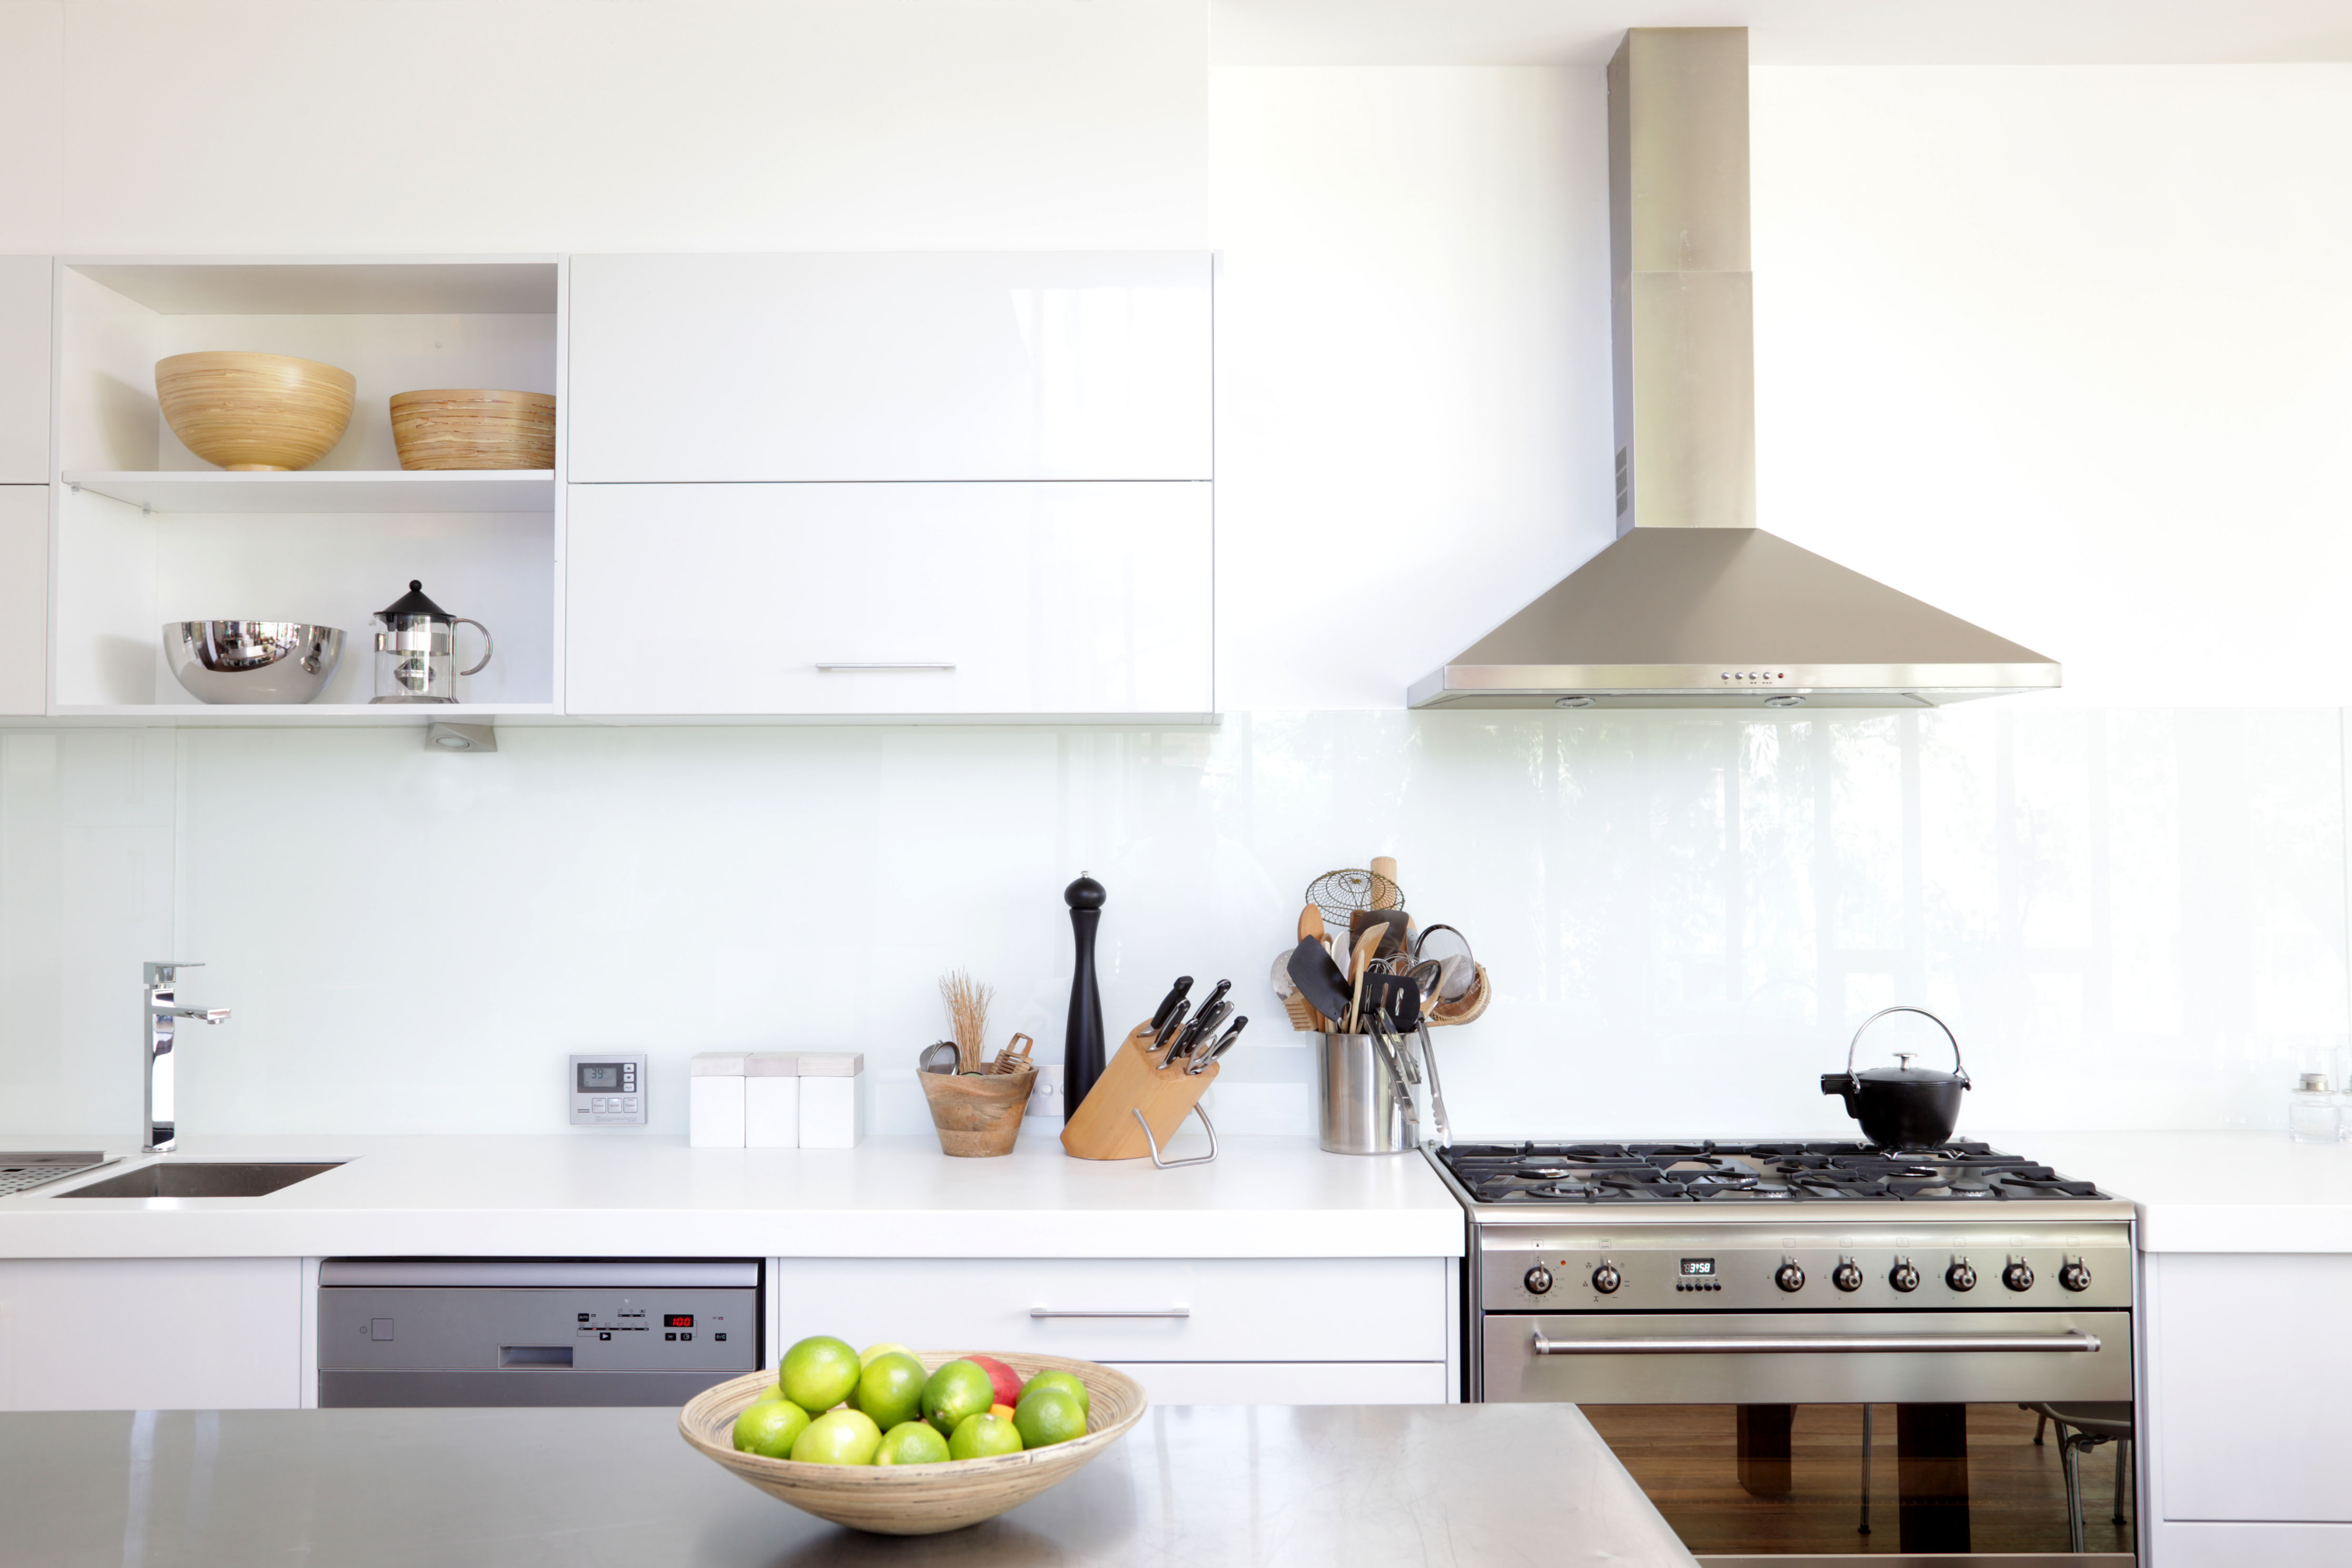 Choosing a High CFM, Quiet Range Hood When Remodeling a Kitchen